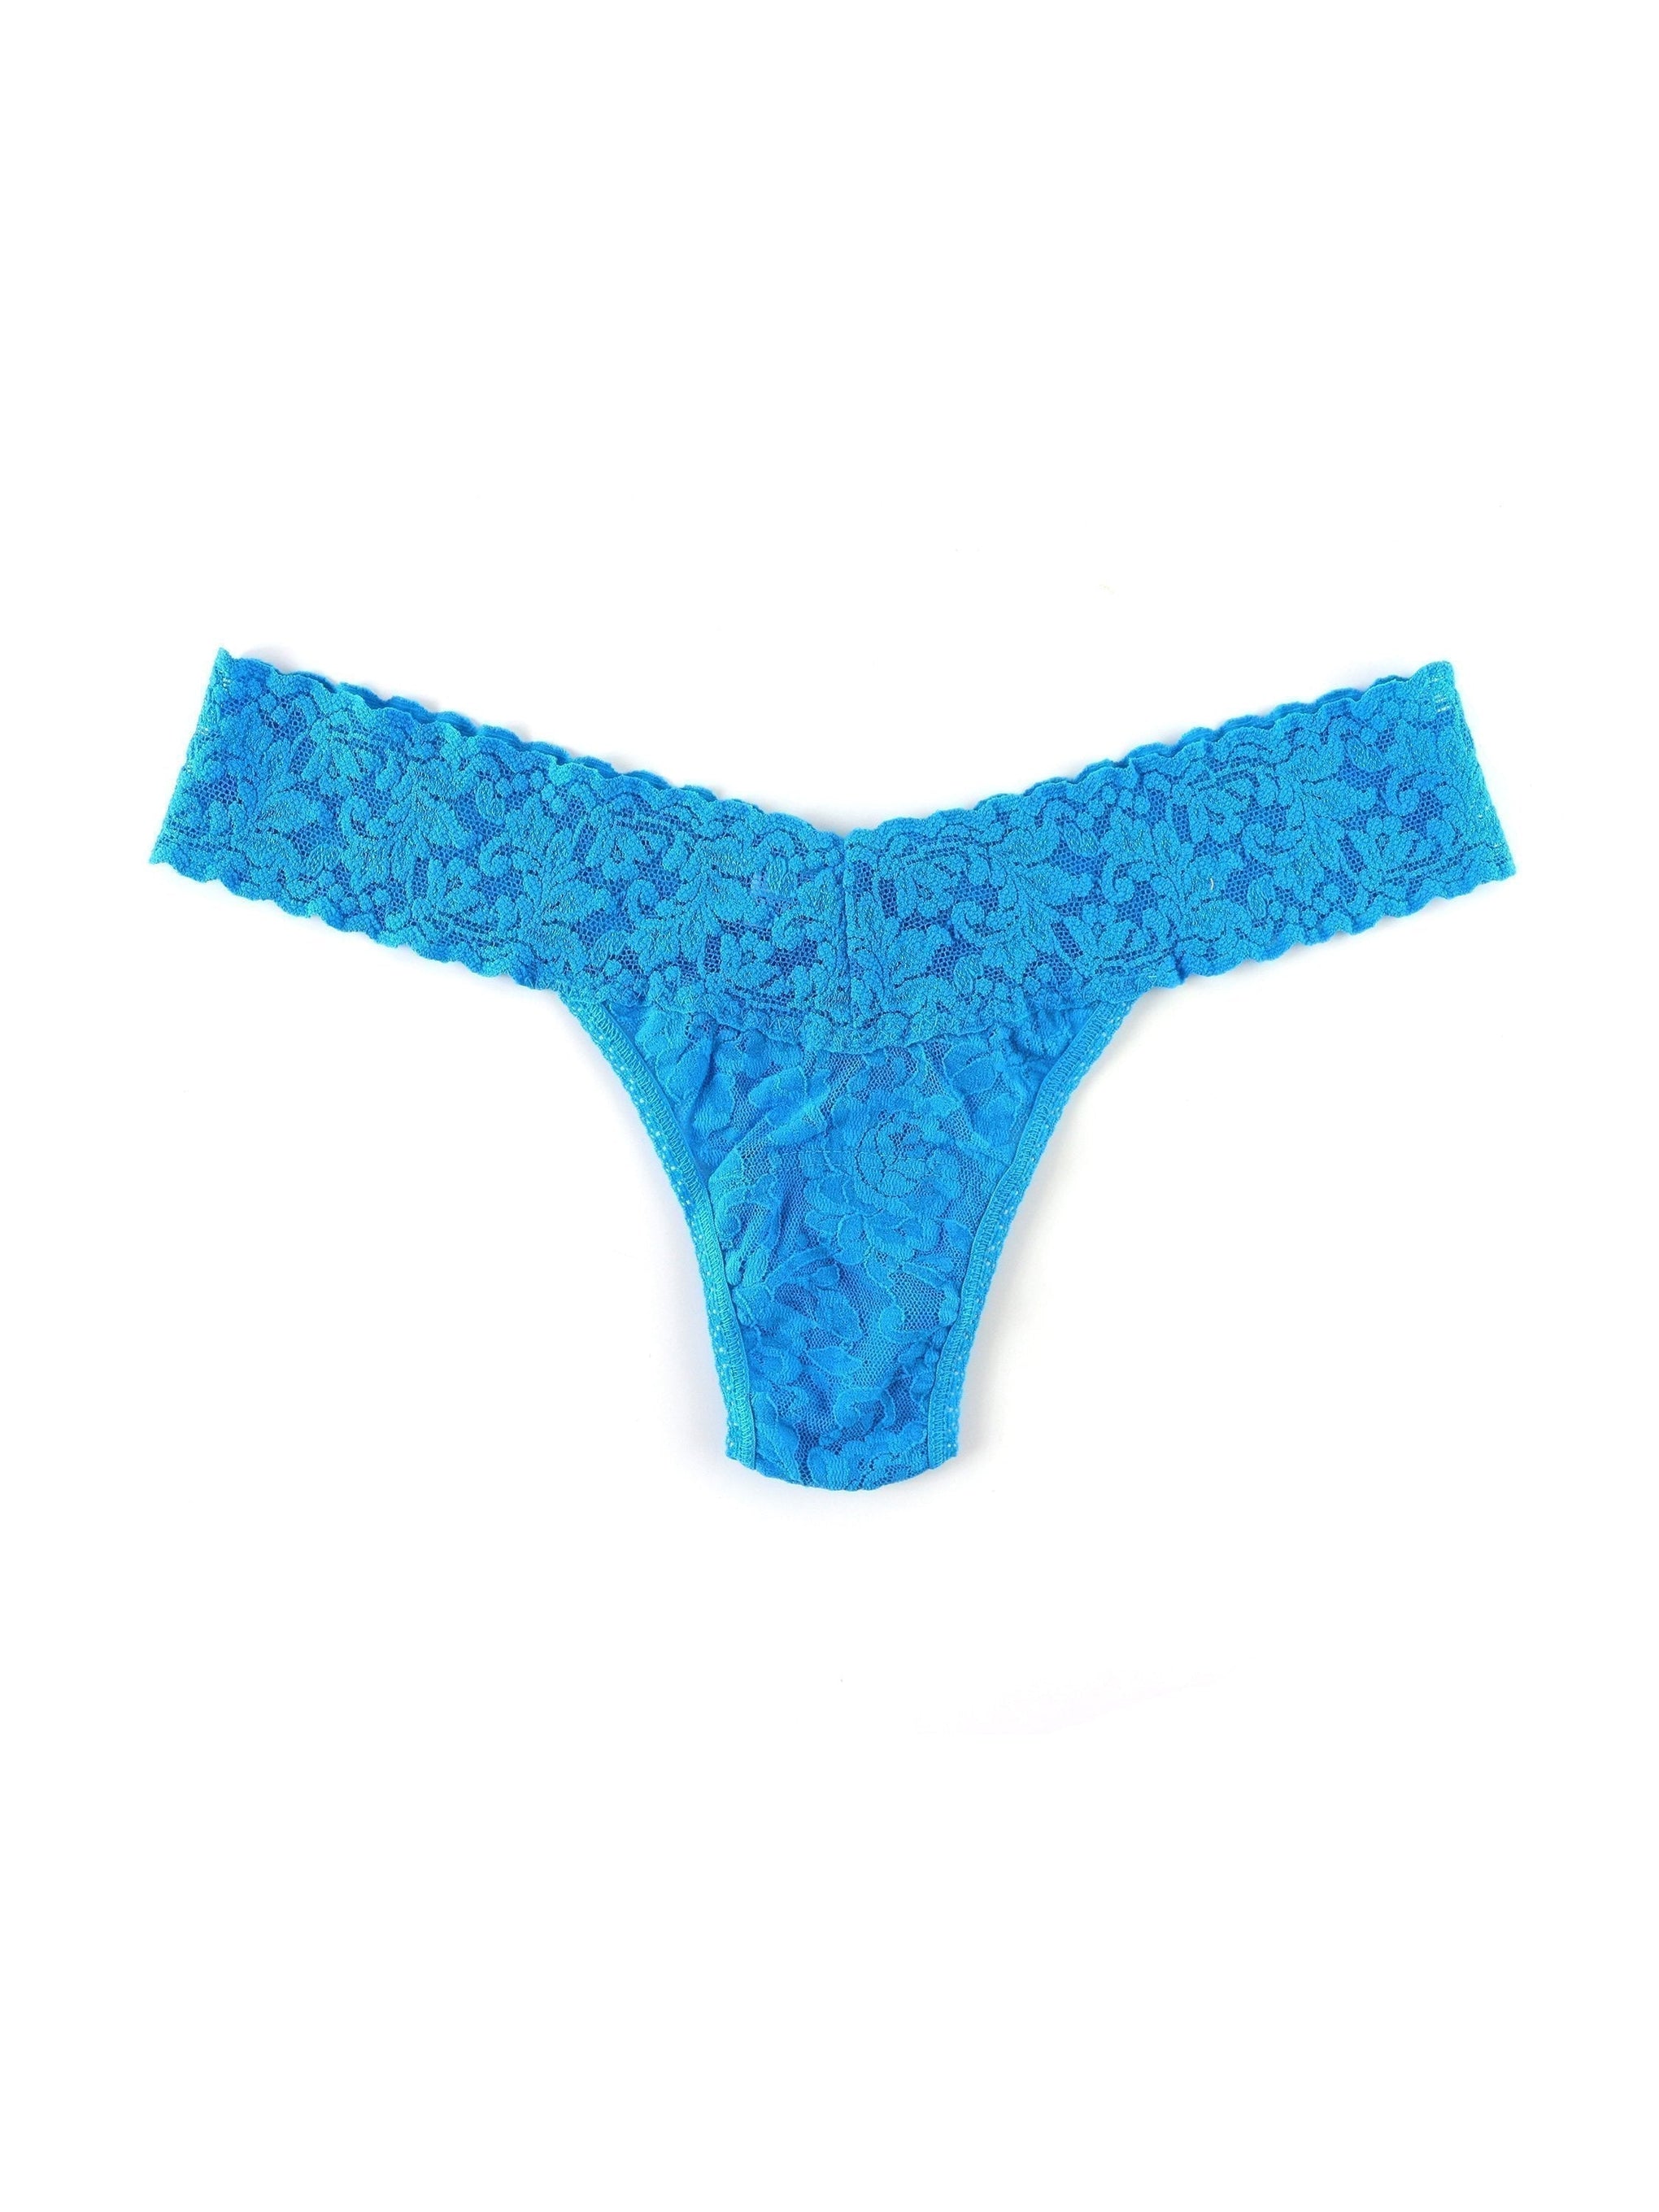 Petite Size Signature Lace Low Rise Thong Fiji Blue